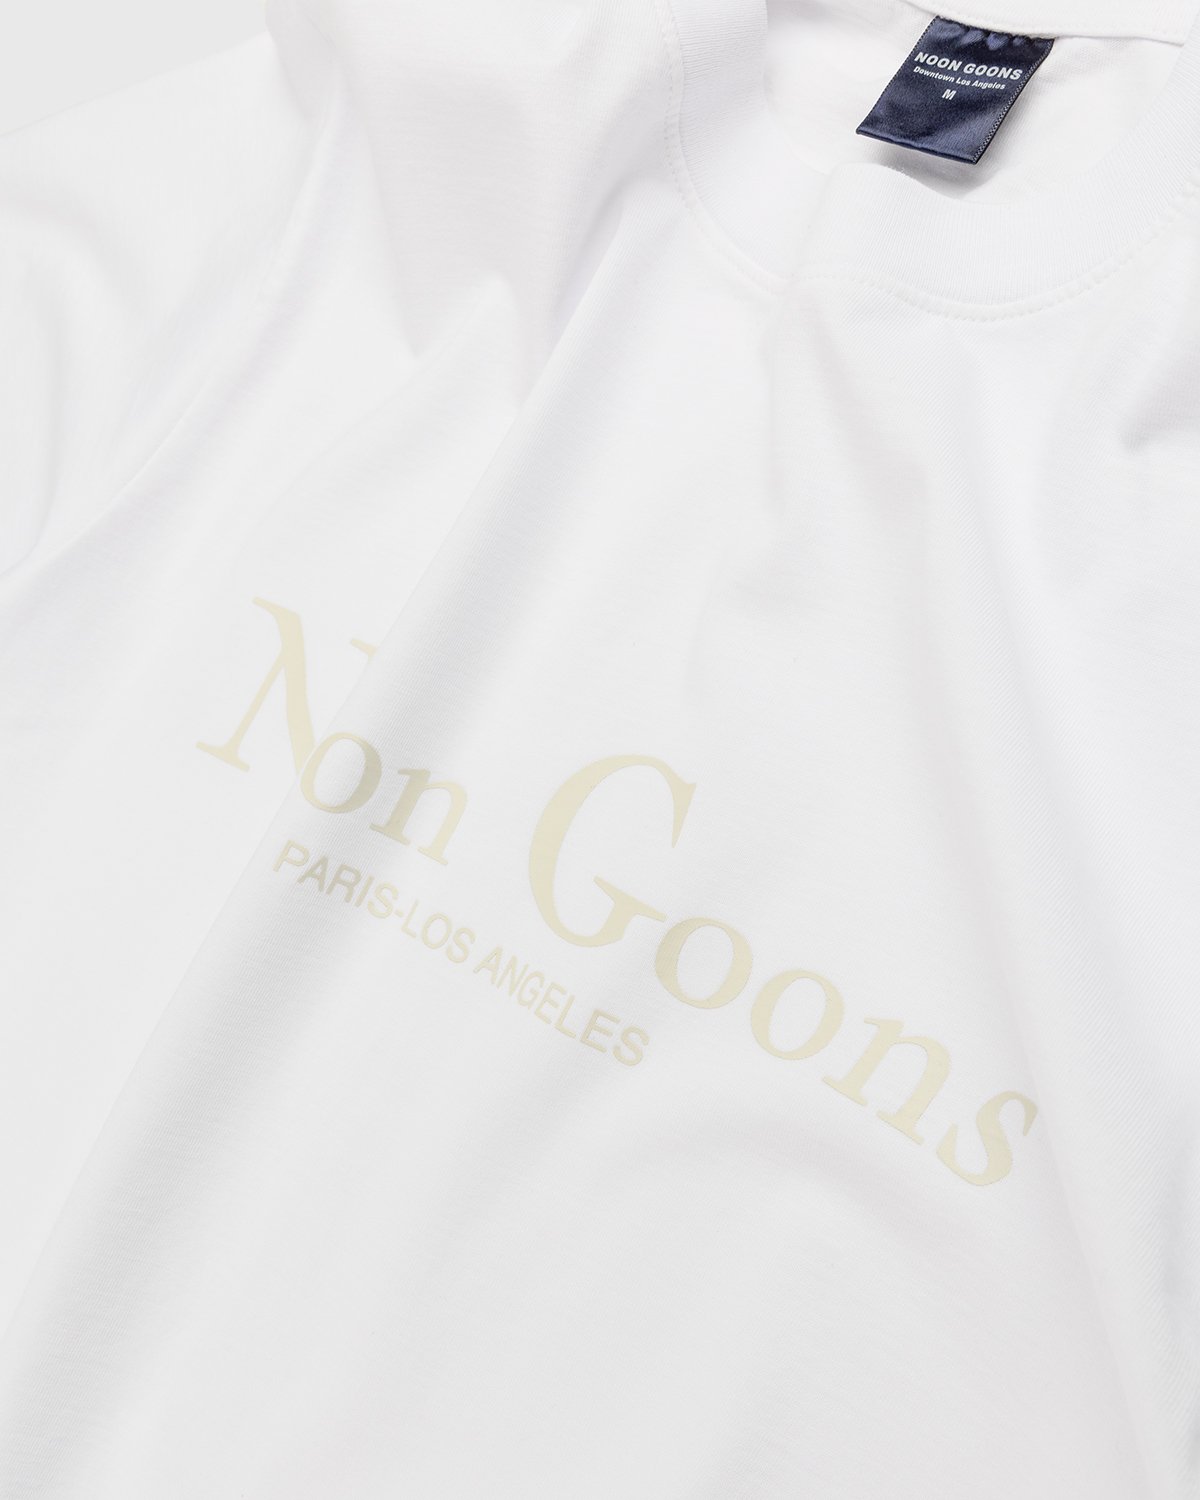 Noon Goons - Sister City T-Shirt White - Clothing - White - Image 3